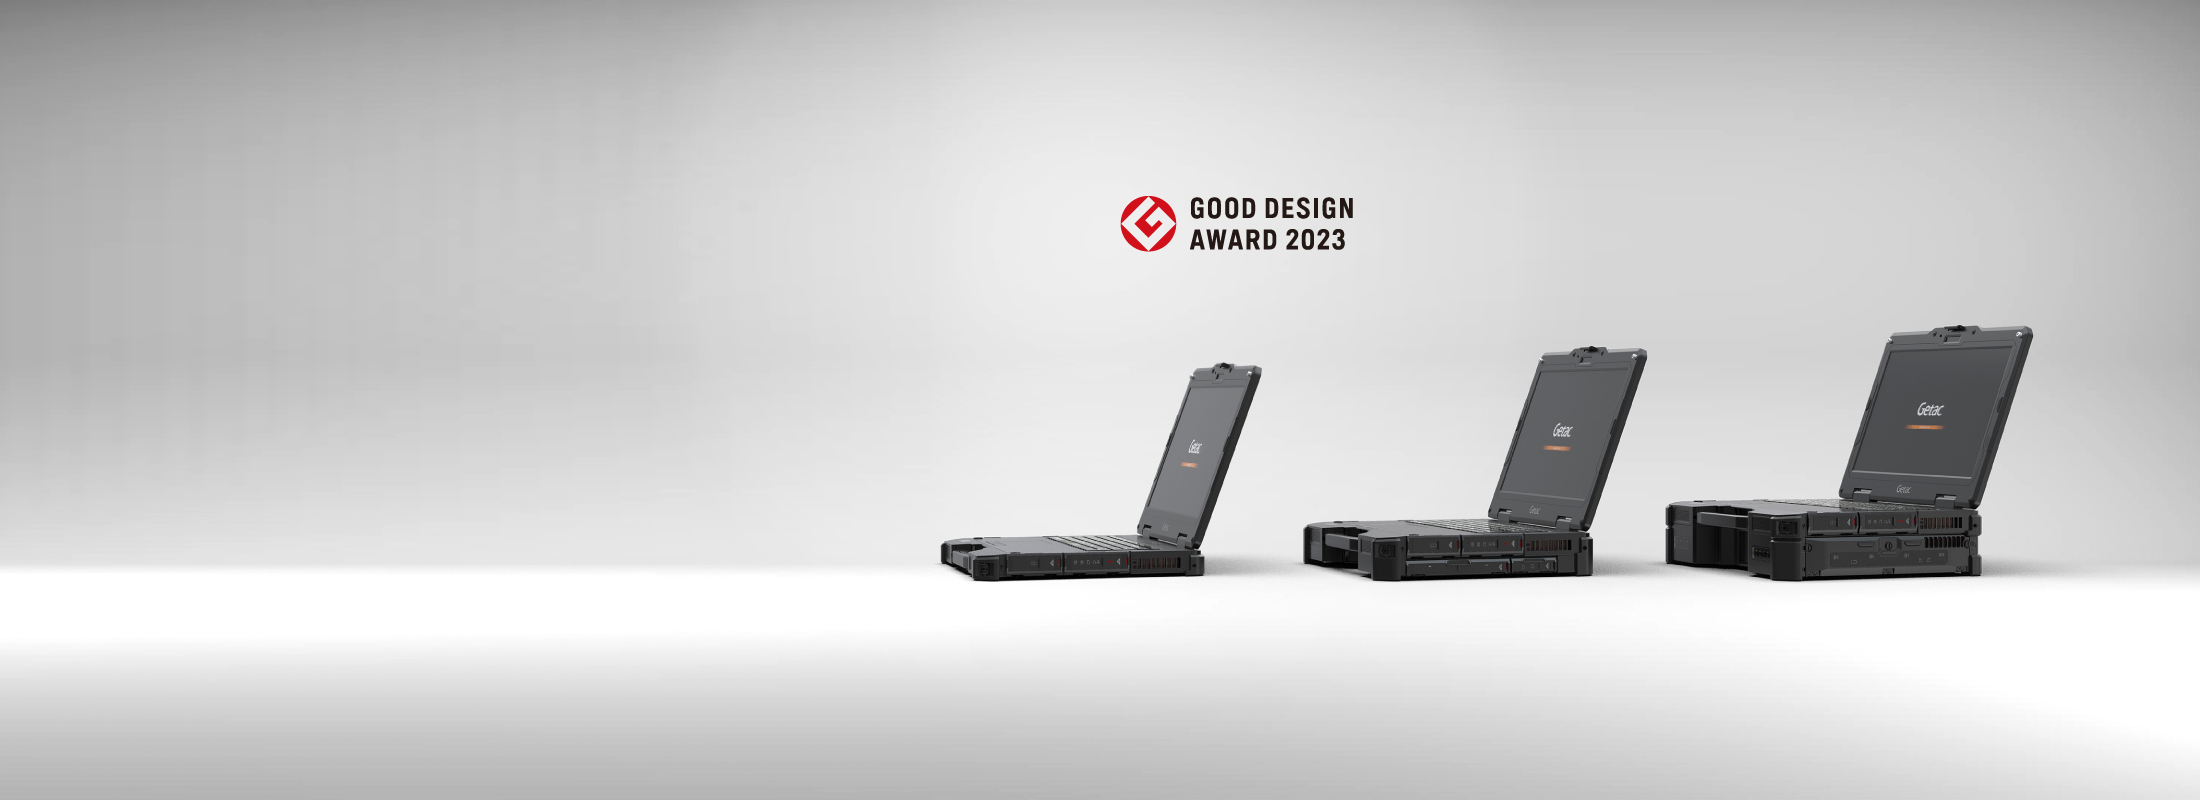 Getac_X600 Good Design Awards_Homepage banner_2200x800